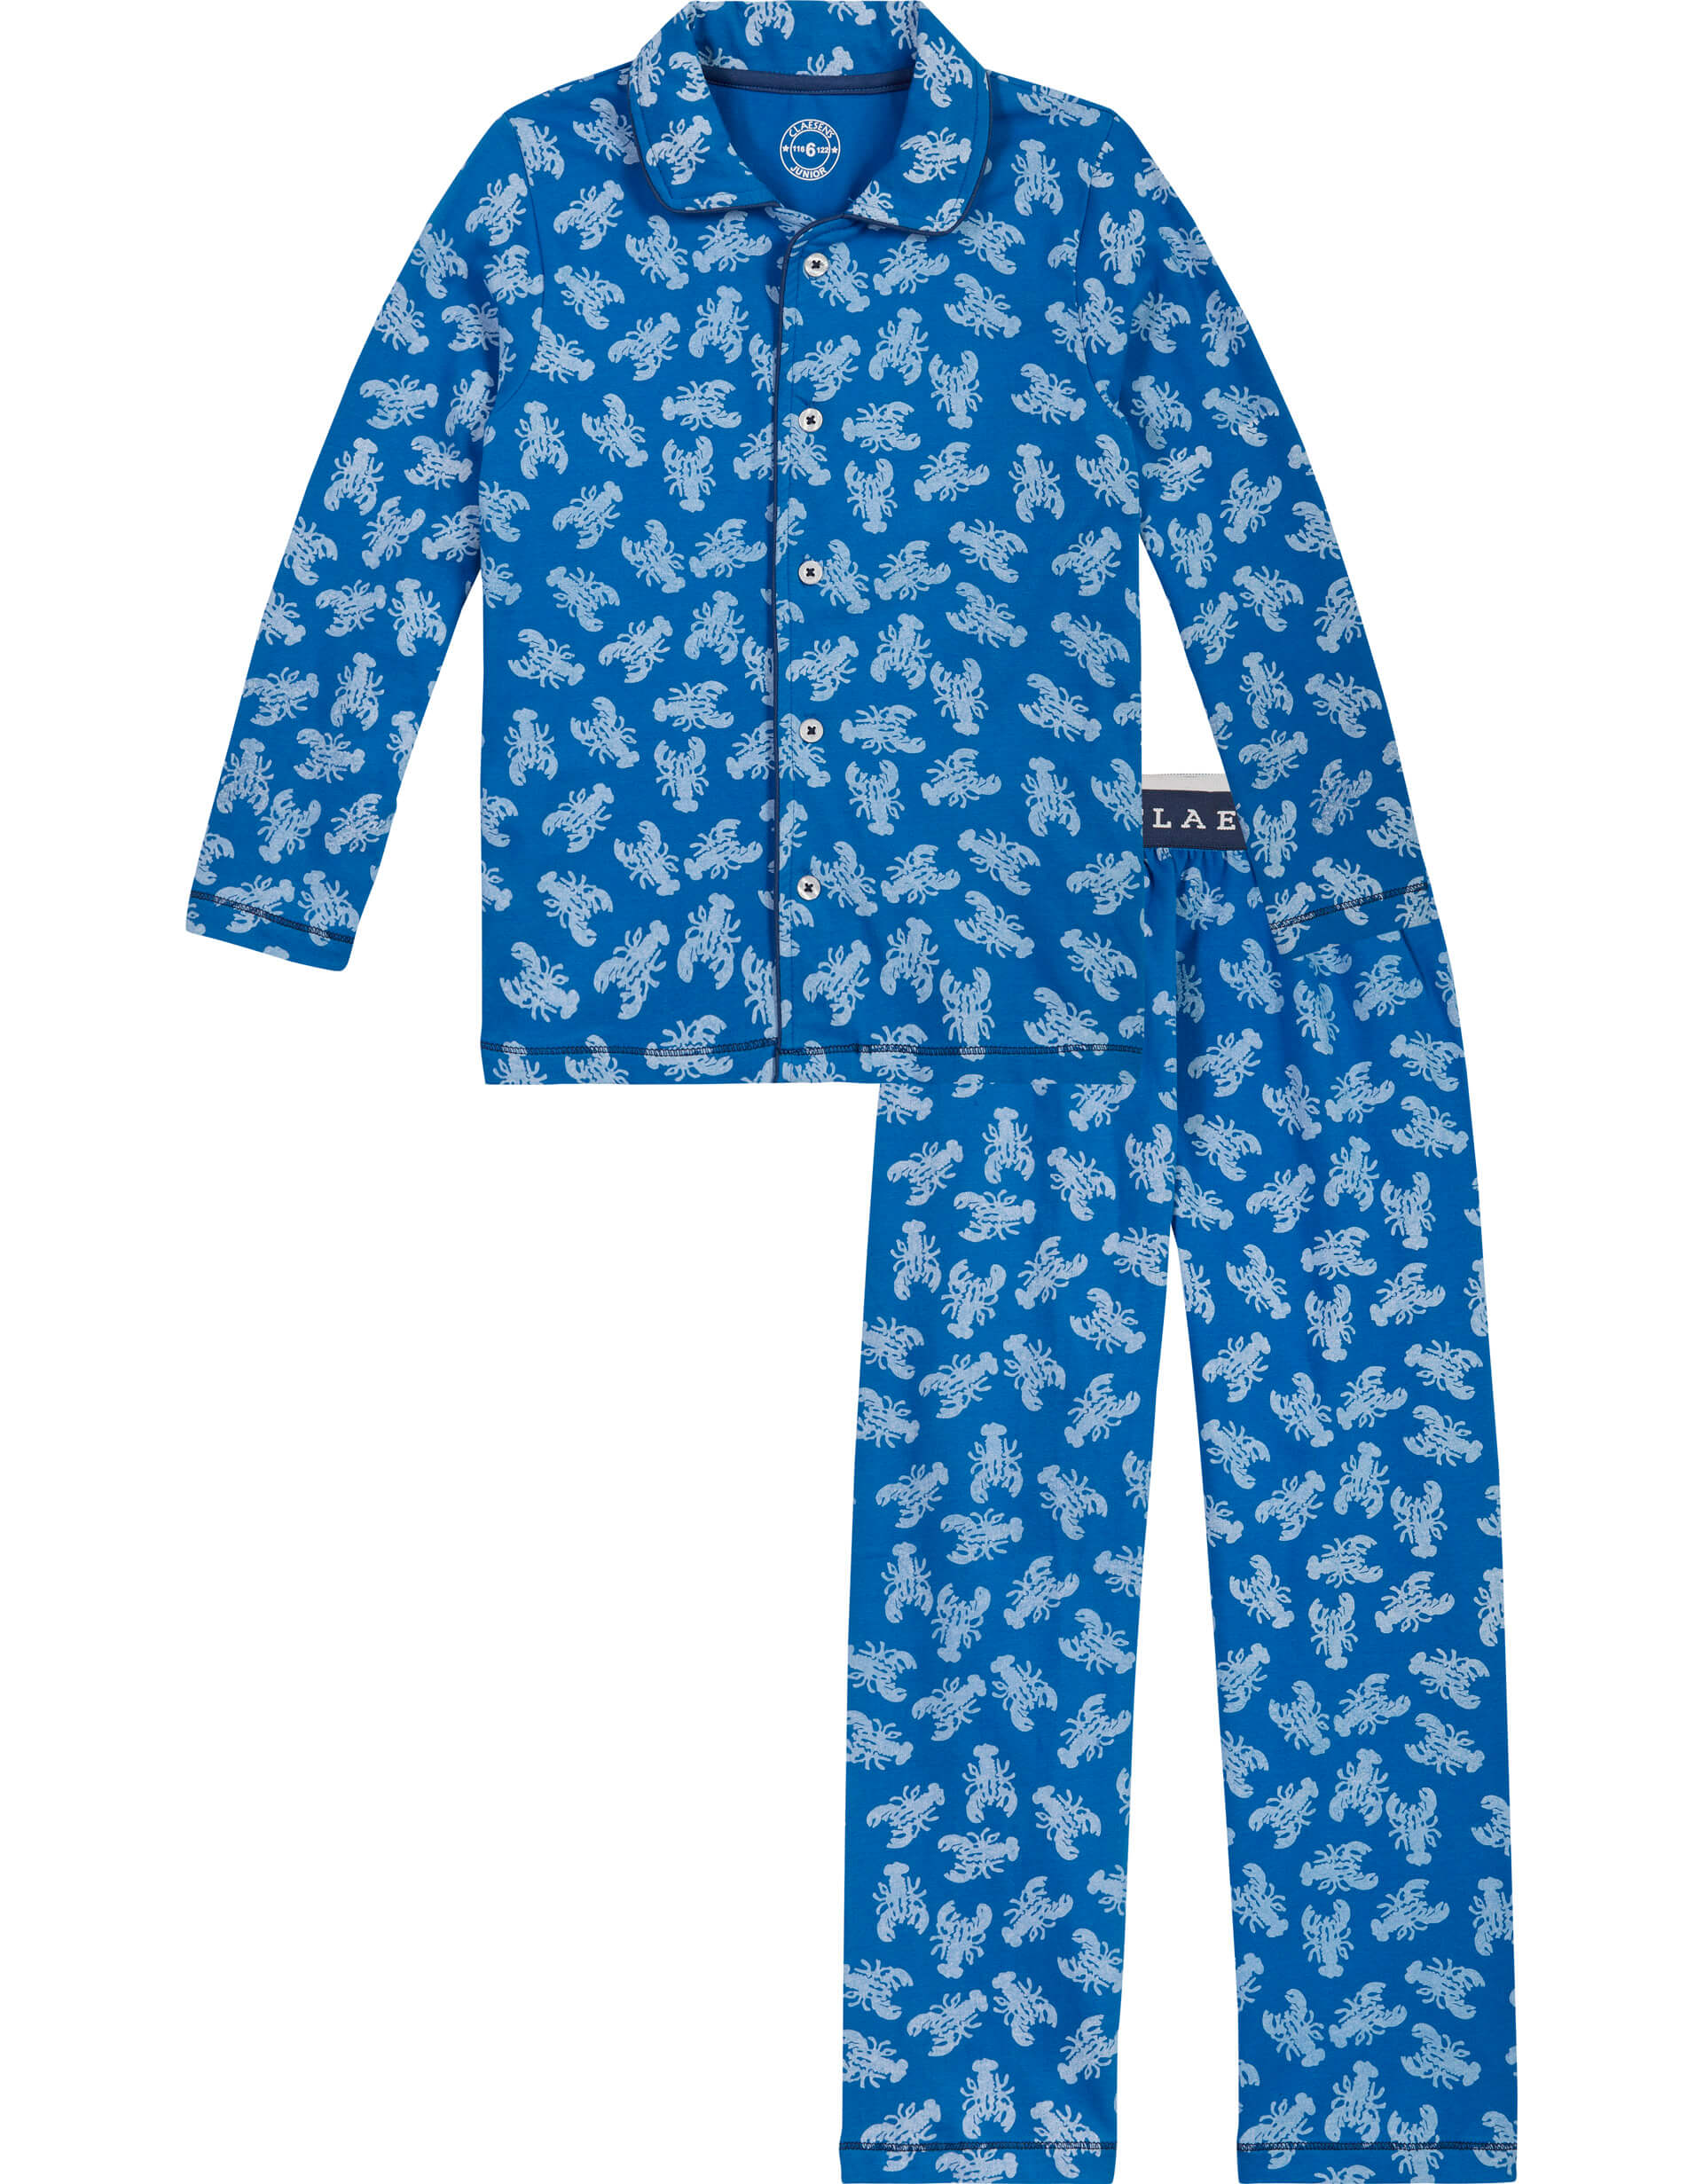 Wild Modernisering Becks Boys Pyjama Set | 10 | 220333B-Lobster-10